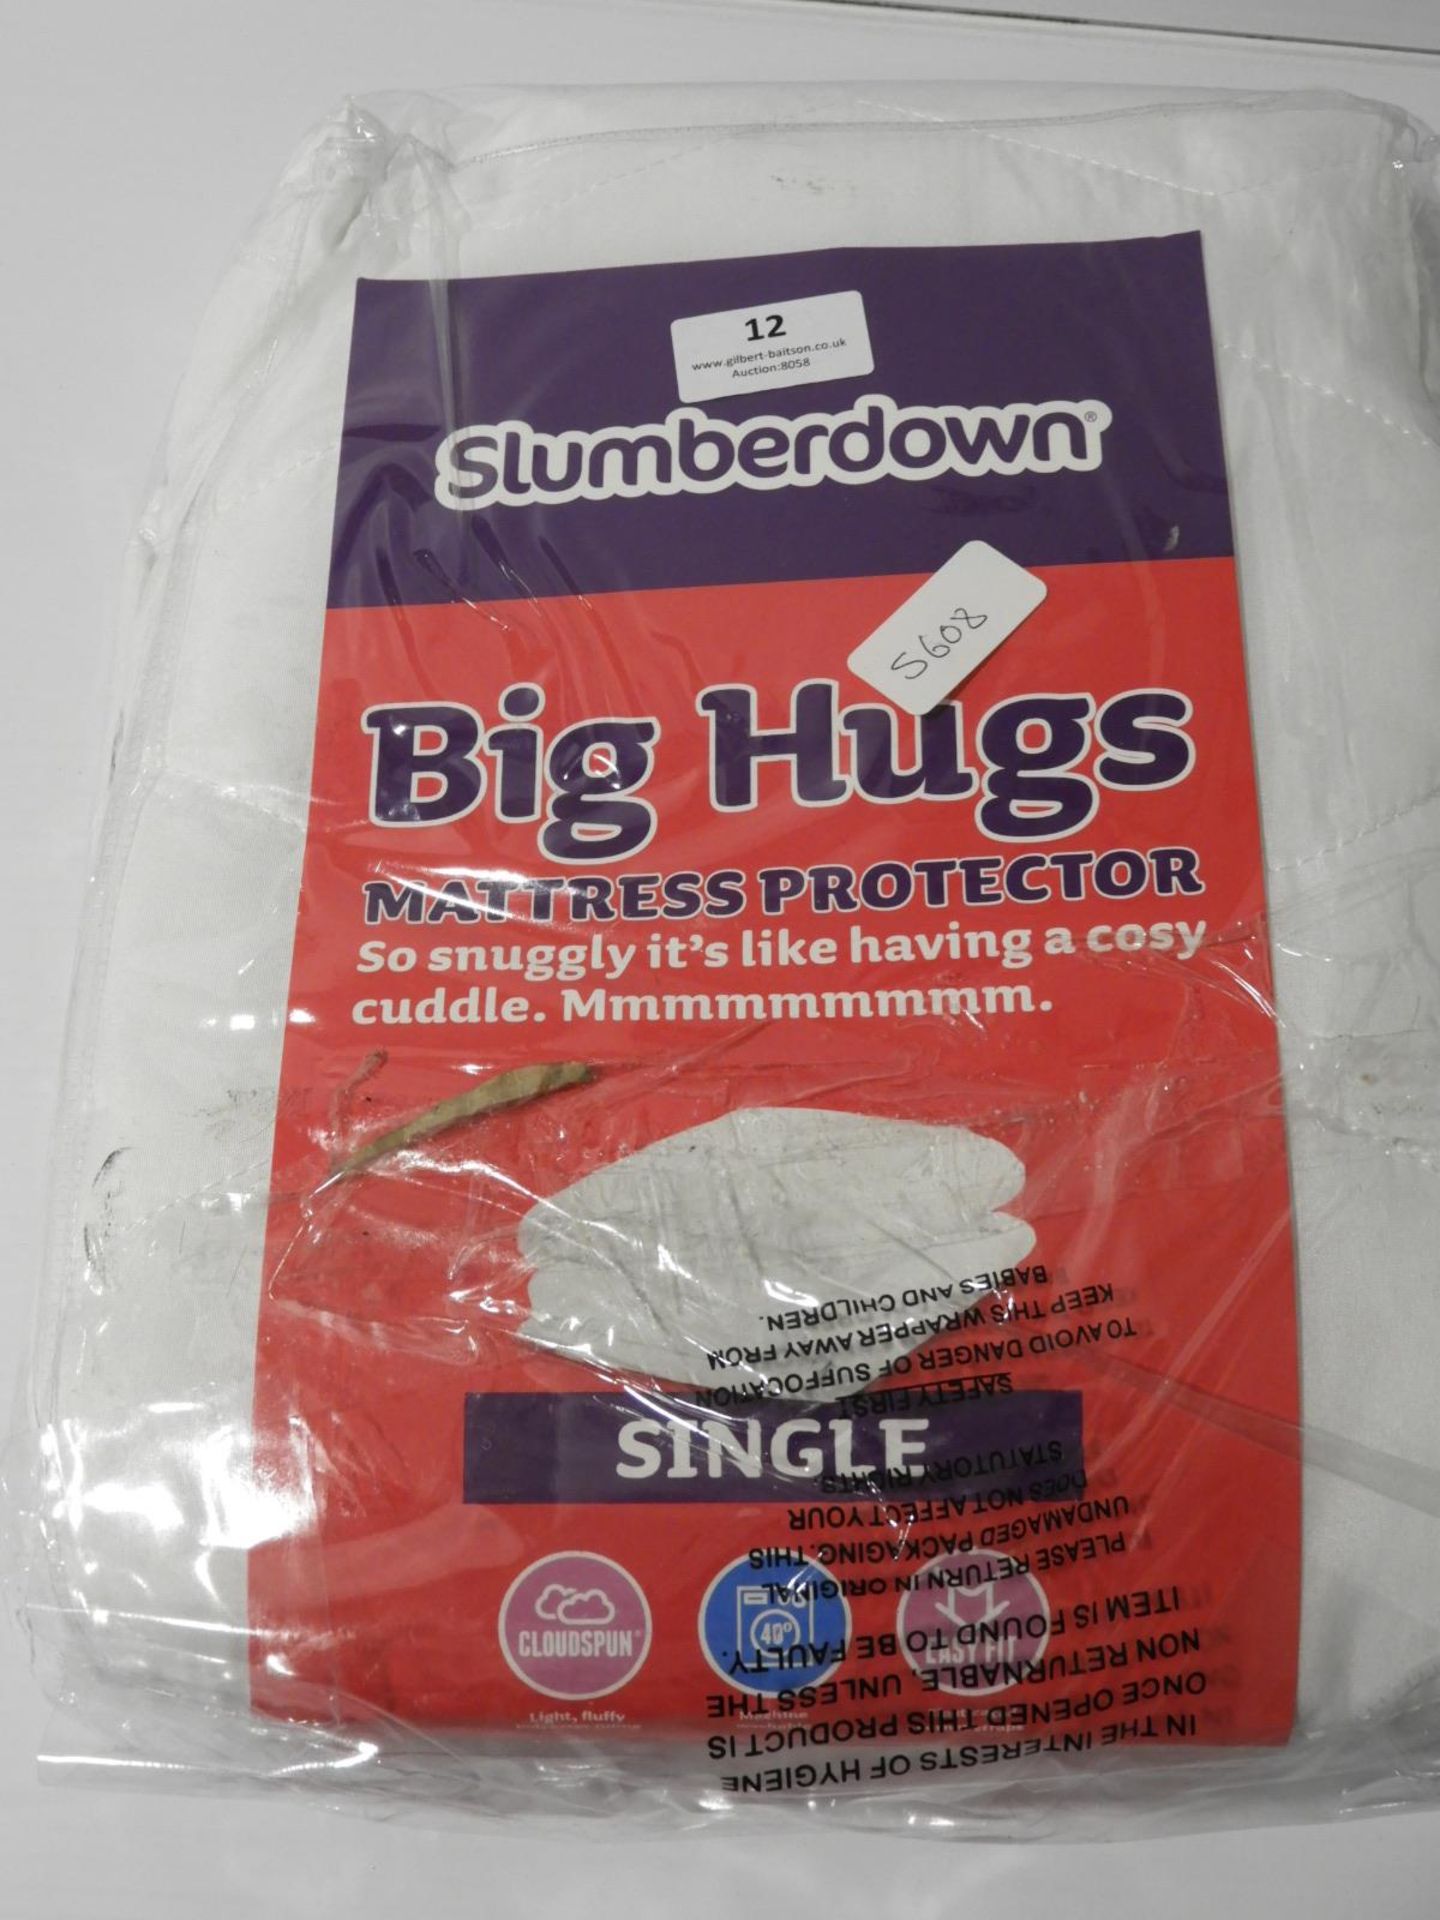 Slumberdown "Big Hug" Mattress Protector (Single)